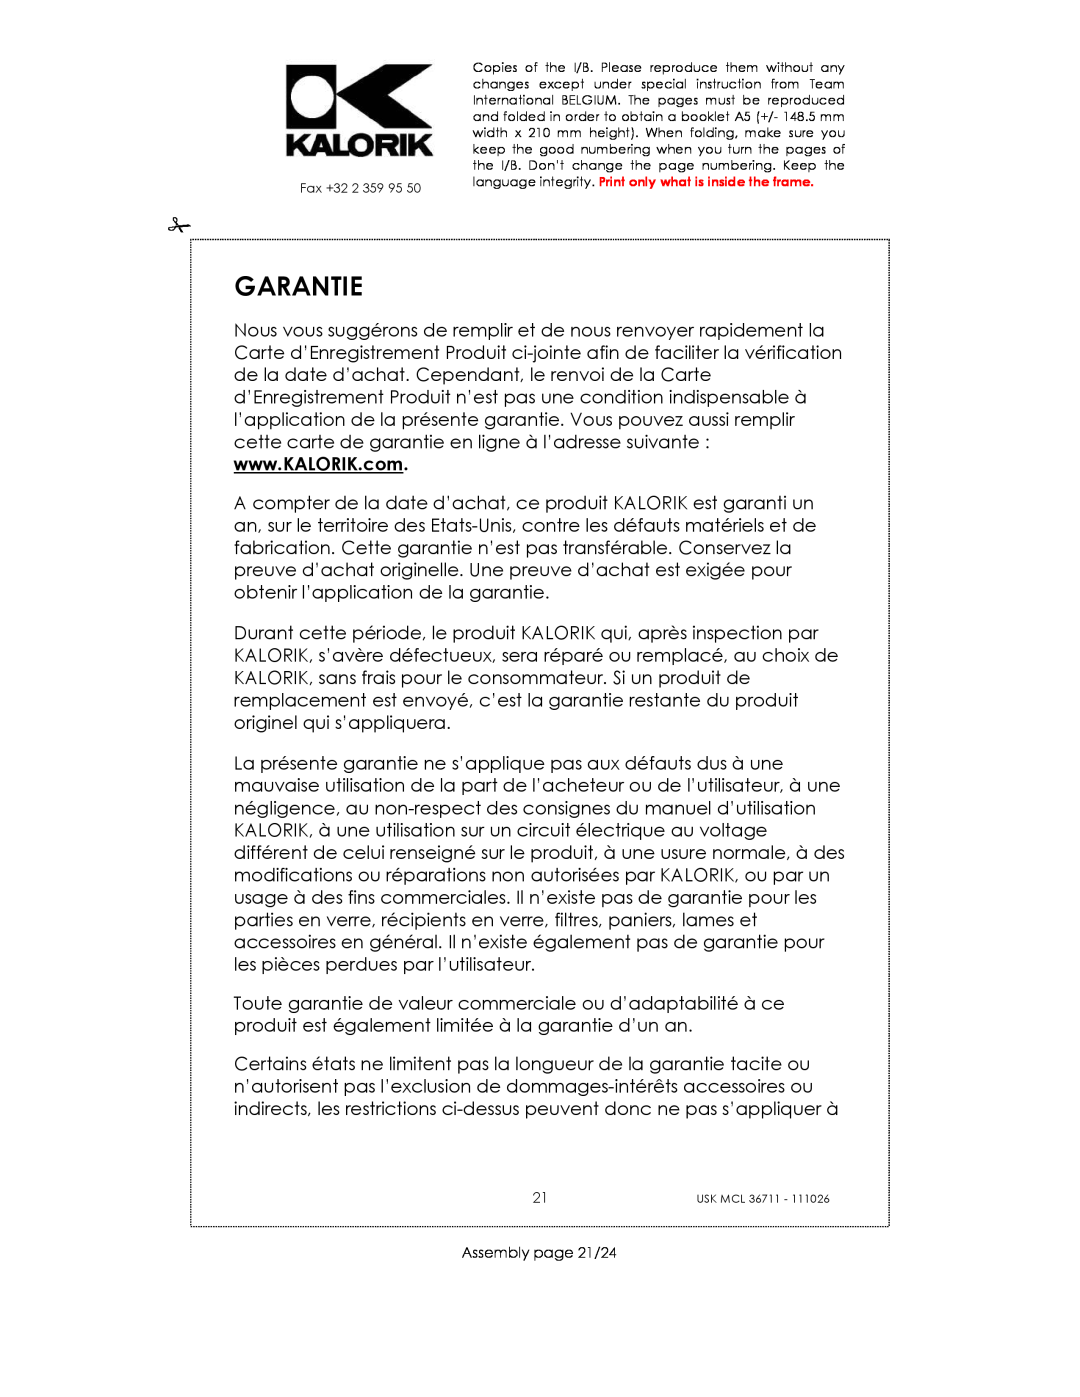 Kalorik USK MCL 36711 manual Garantie, Assembly page 21/24 